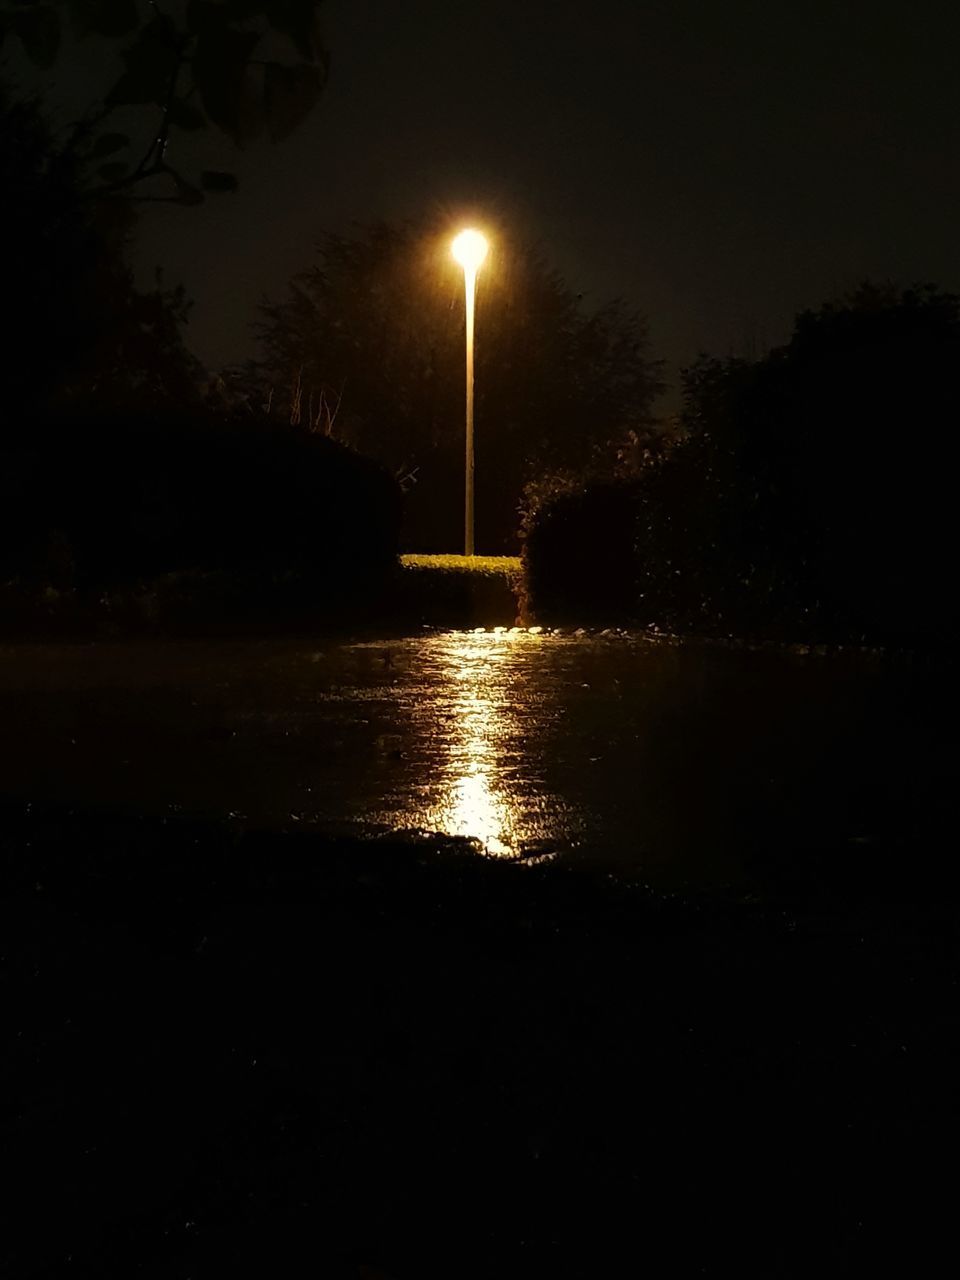 ILLUMINATED STREET BY LAKE AT NIGHT